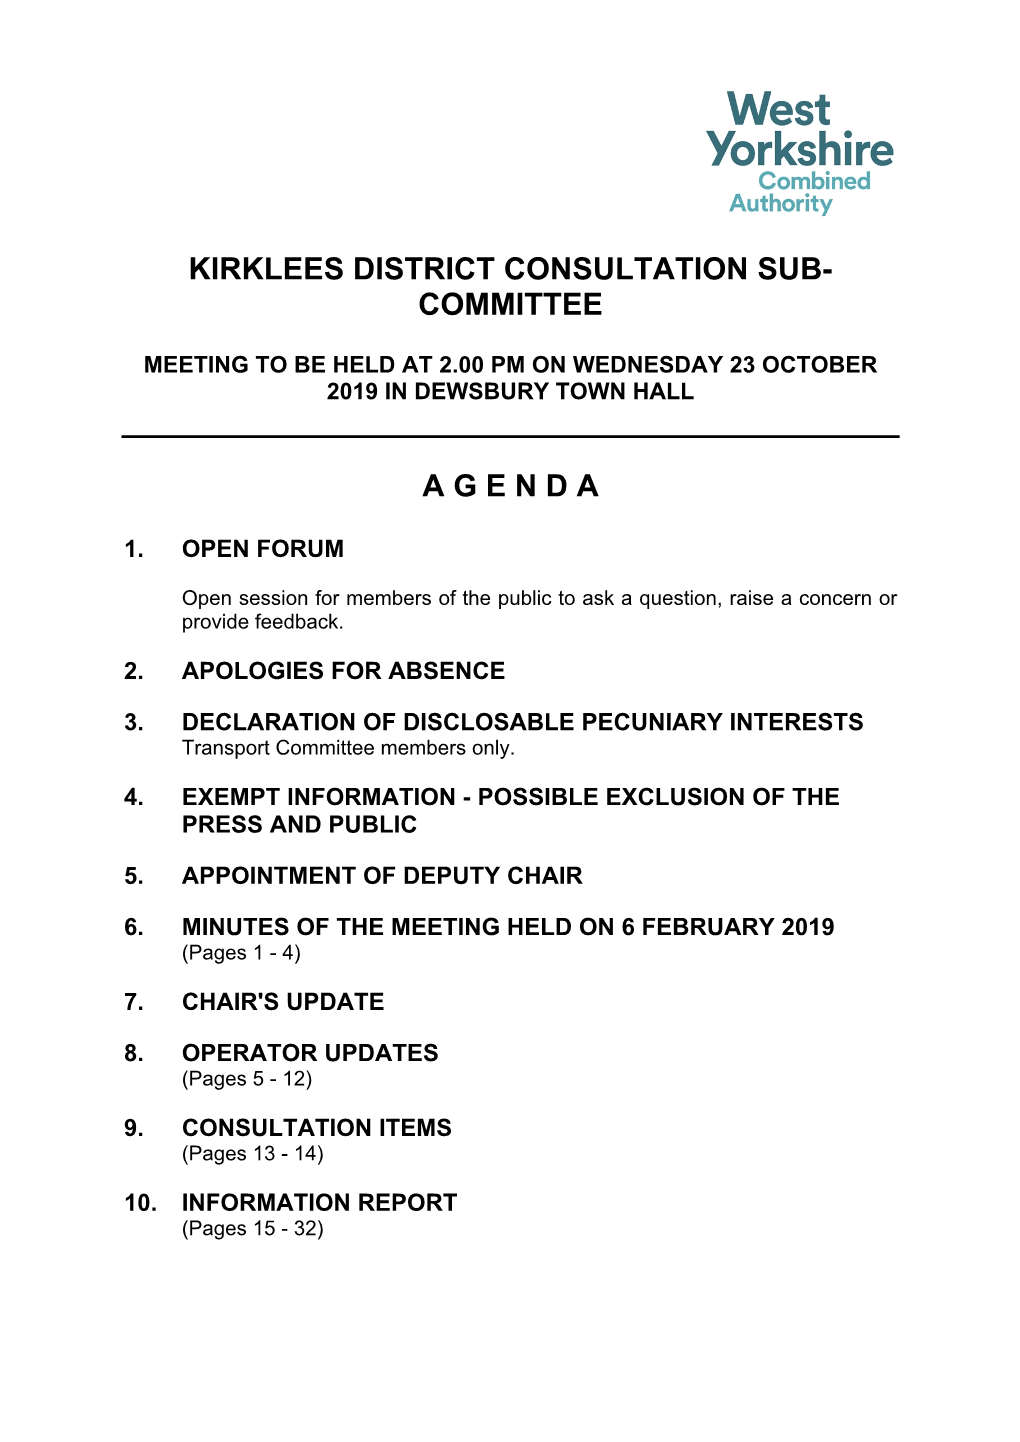 (Public Pack)Agenda Document for Kirklees District Consultation Sub